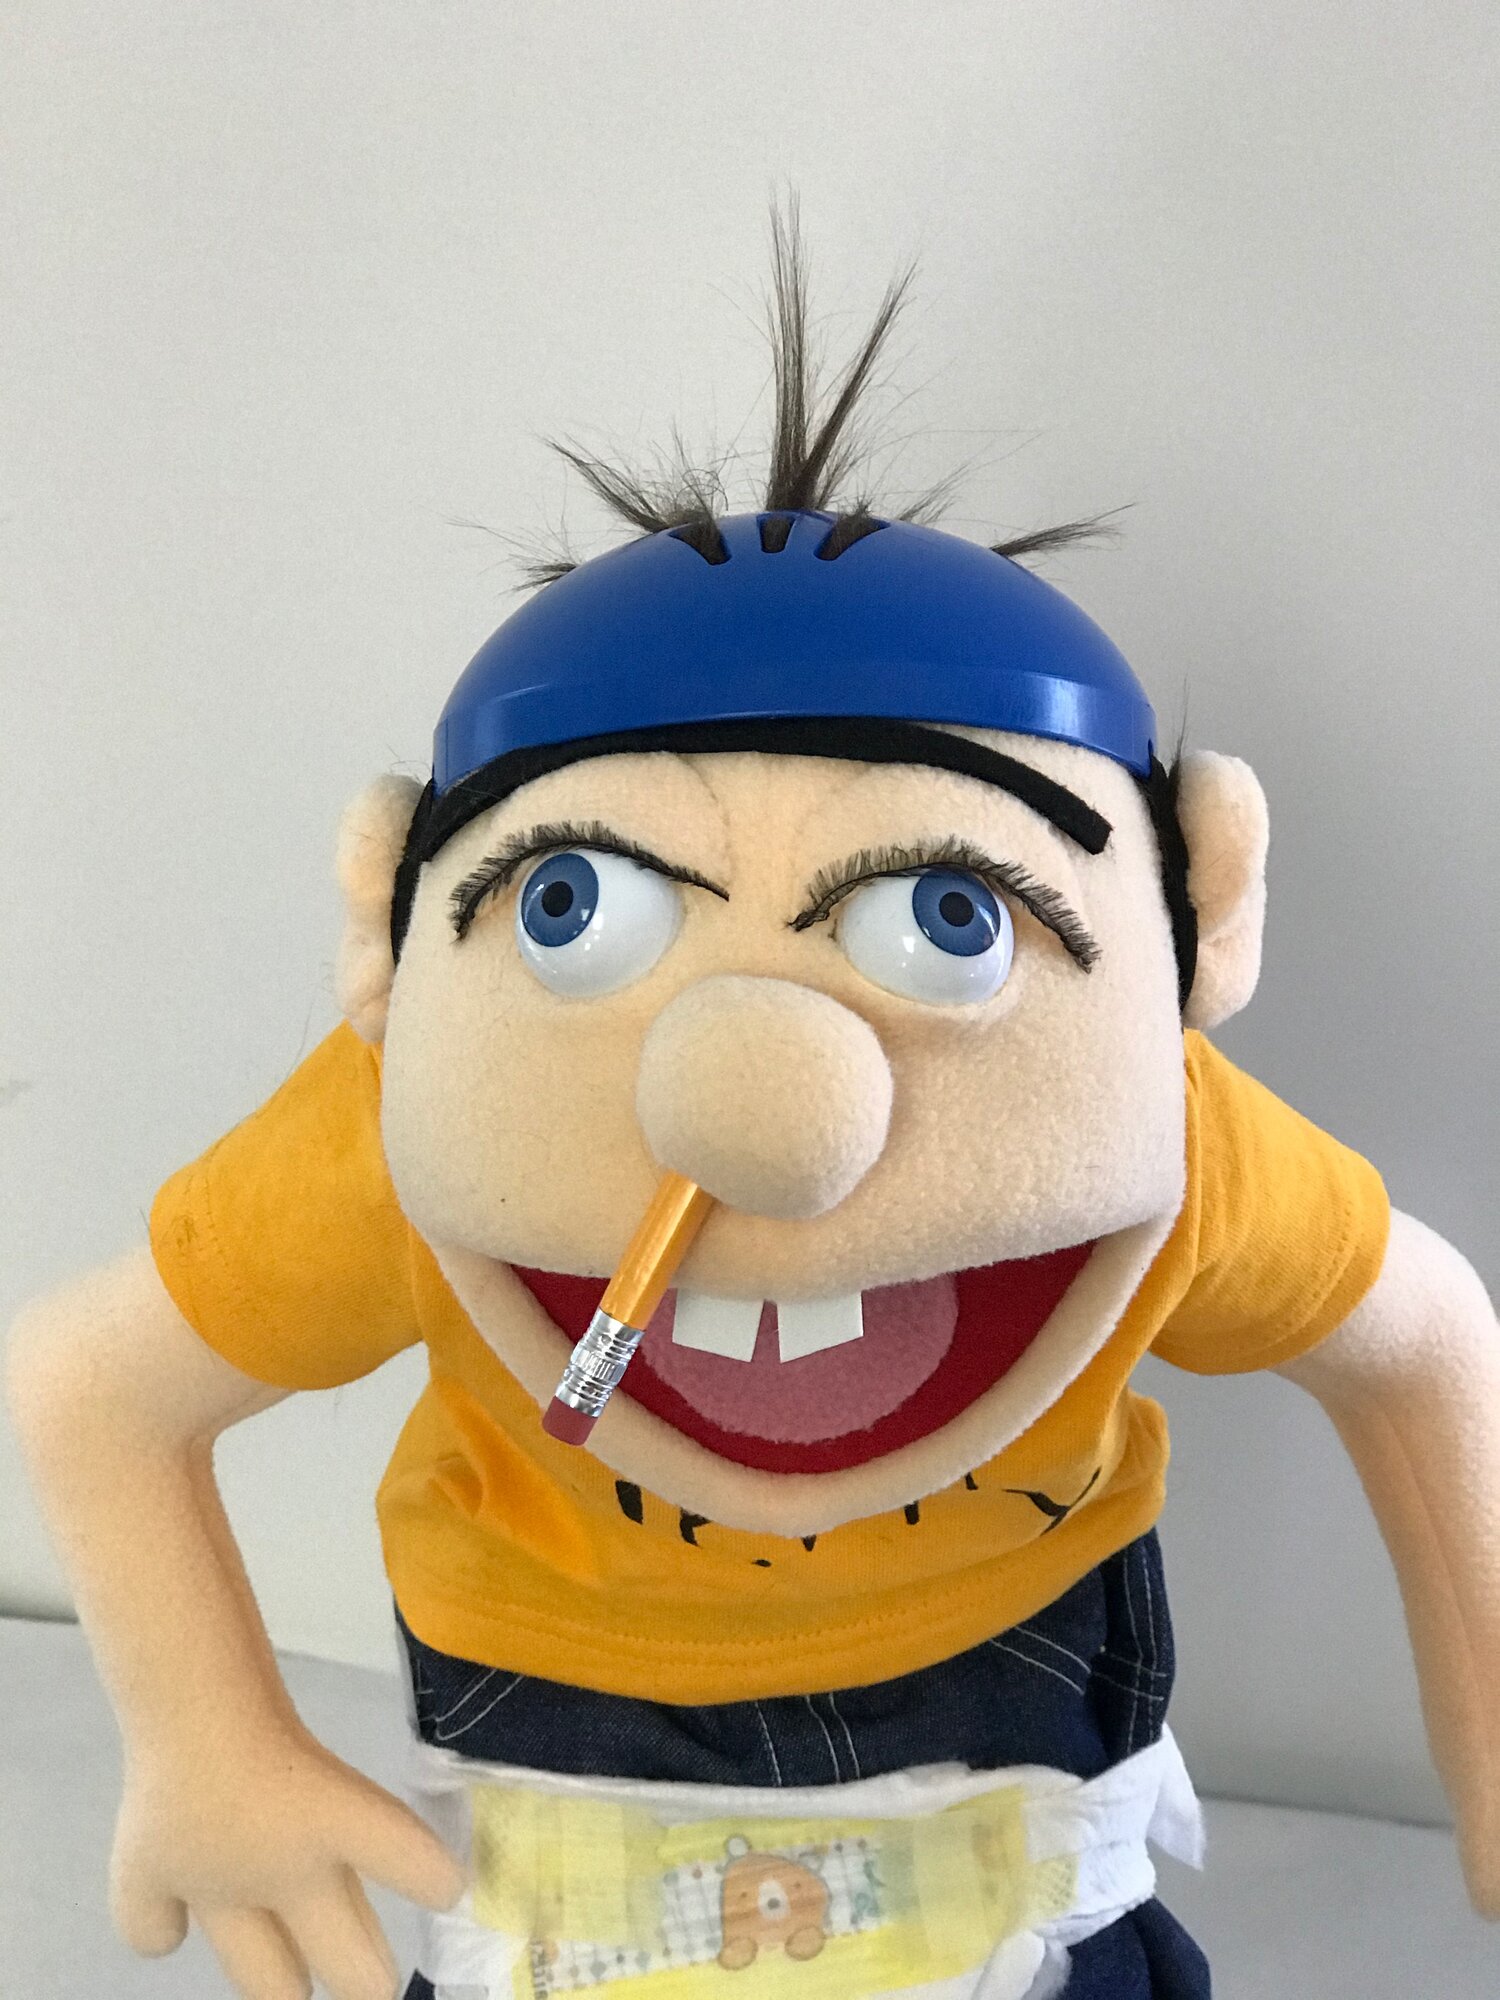 The original Jeffy puppet